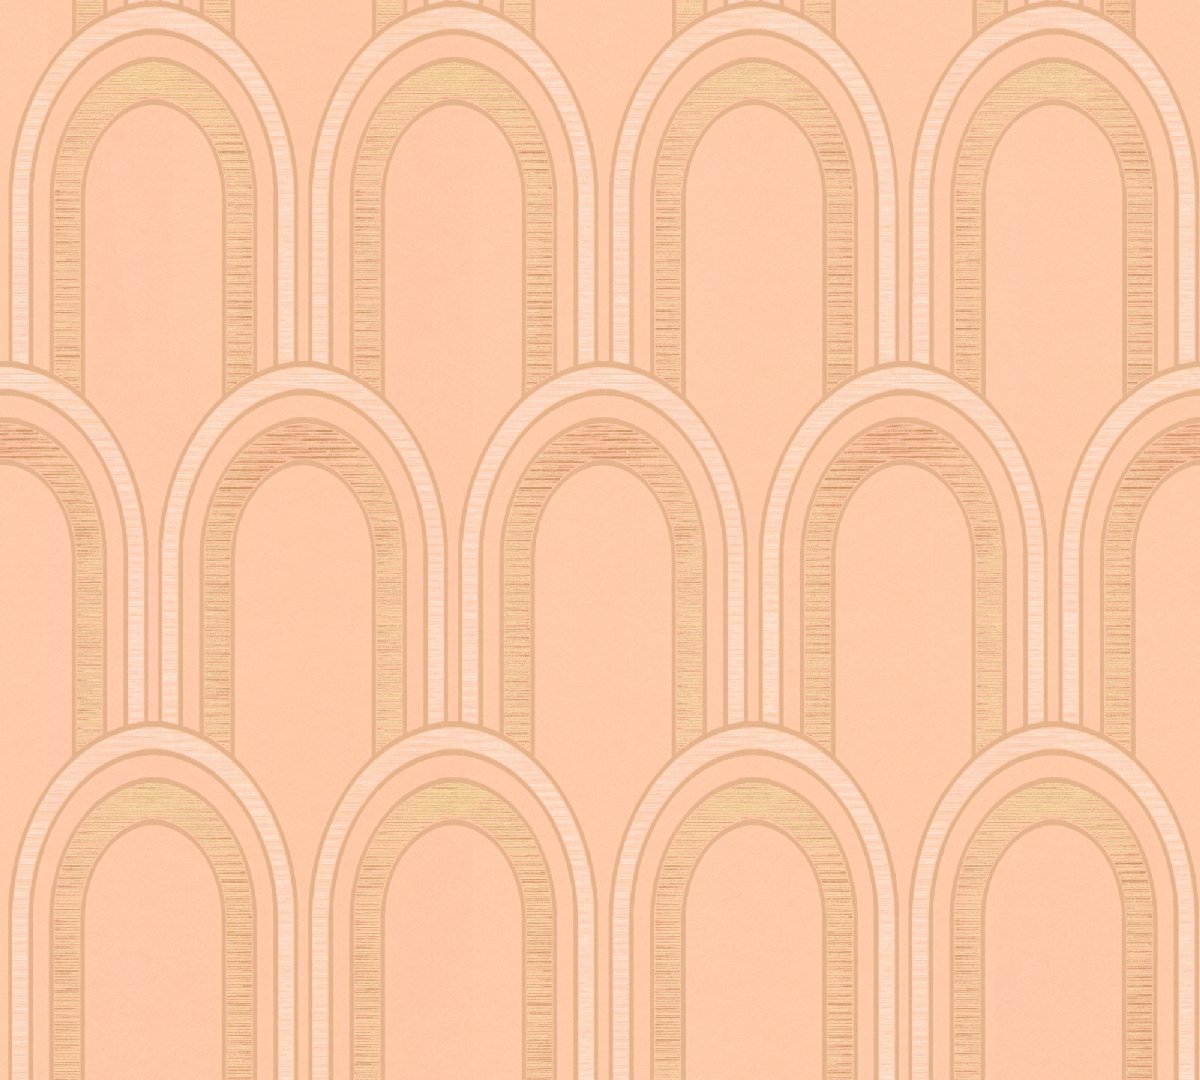 Vliestapete AP Arcade 391761 - Art Deco Muster - Orange, Weiß